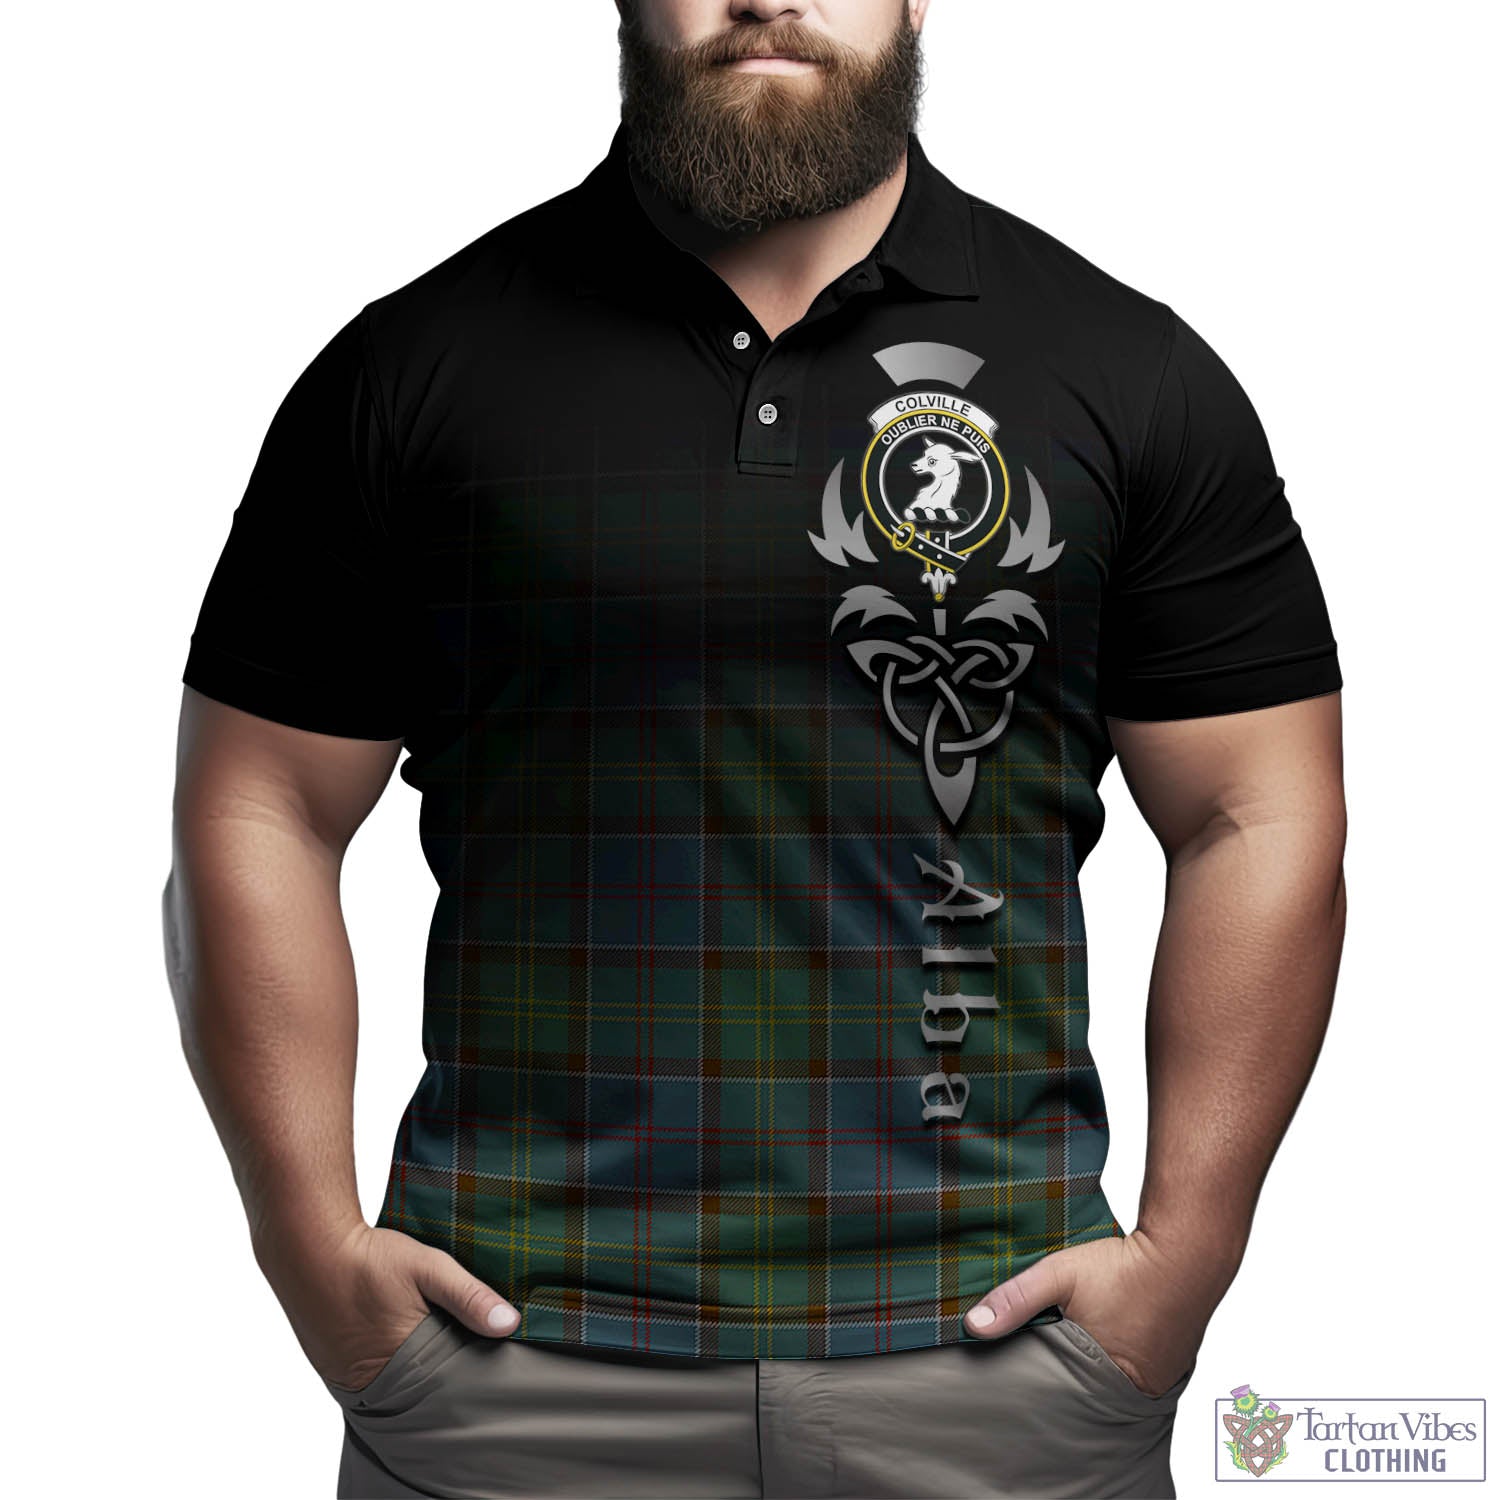 Tartan Vibes Clothing Colville Tartan Polo Shirt Featuring Alba Gu Brath Family Crest Celtic Inspired